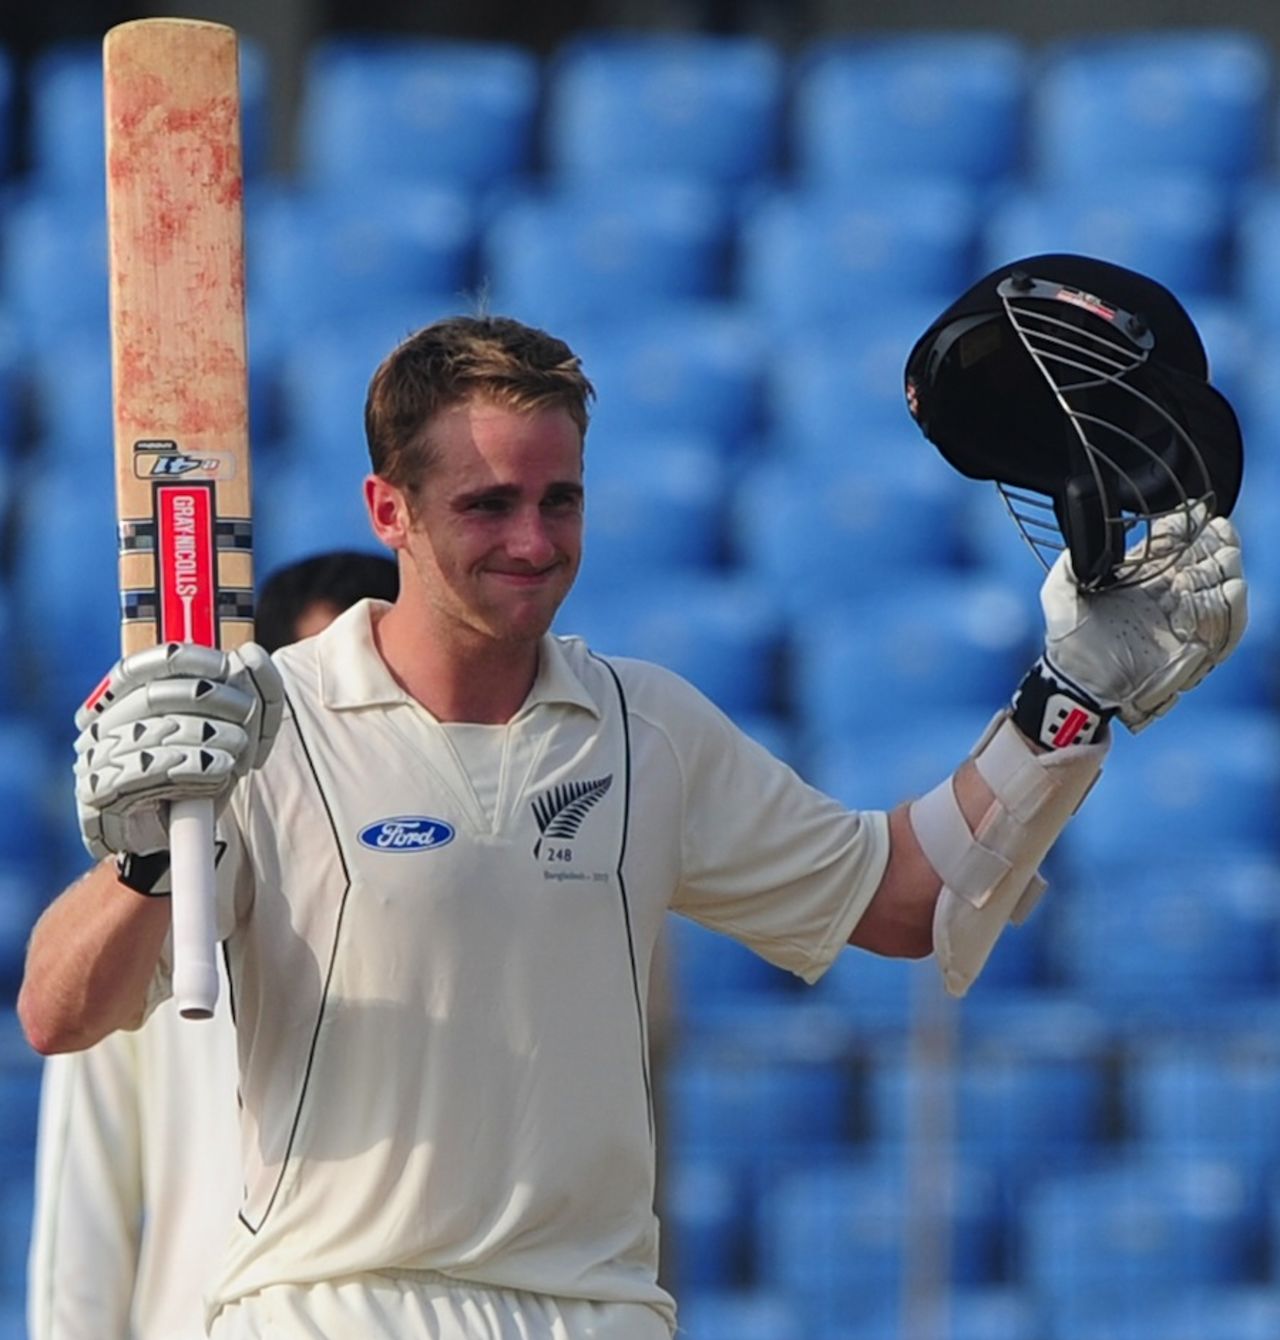 Kane Williamson raises his bat after hitting his fourth Test century, Bangladesh v New Zealand, 1st Test, Chittagong, day 1, October 9, 2013